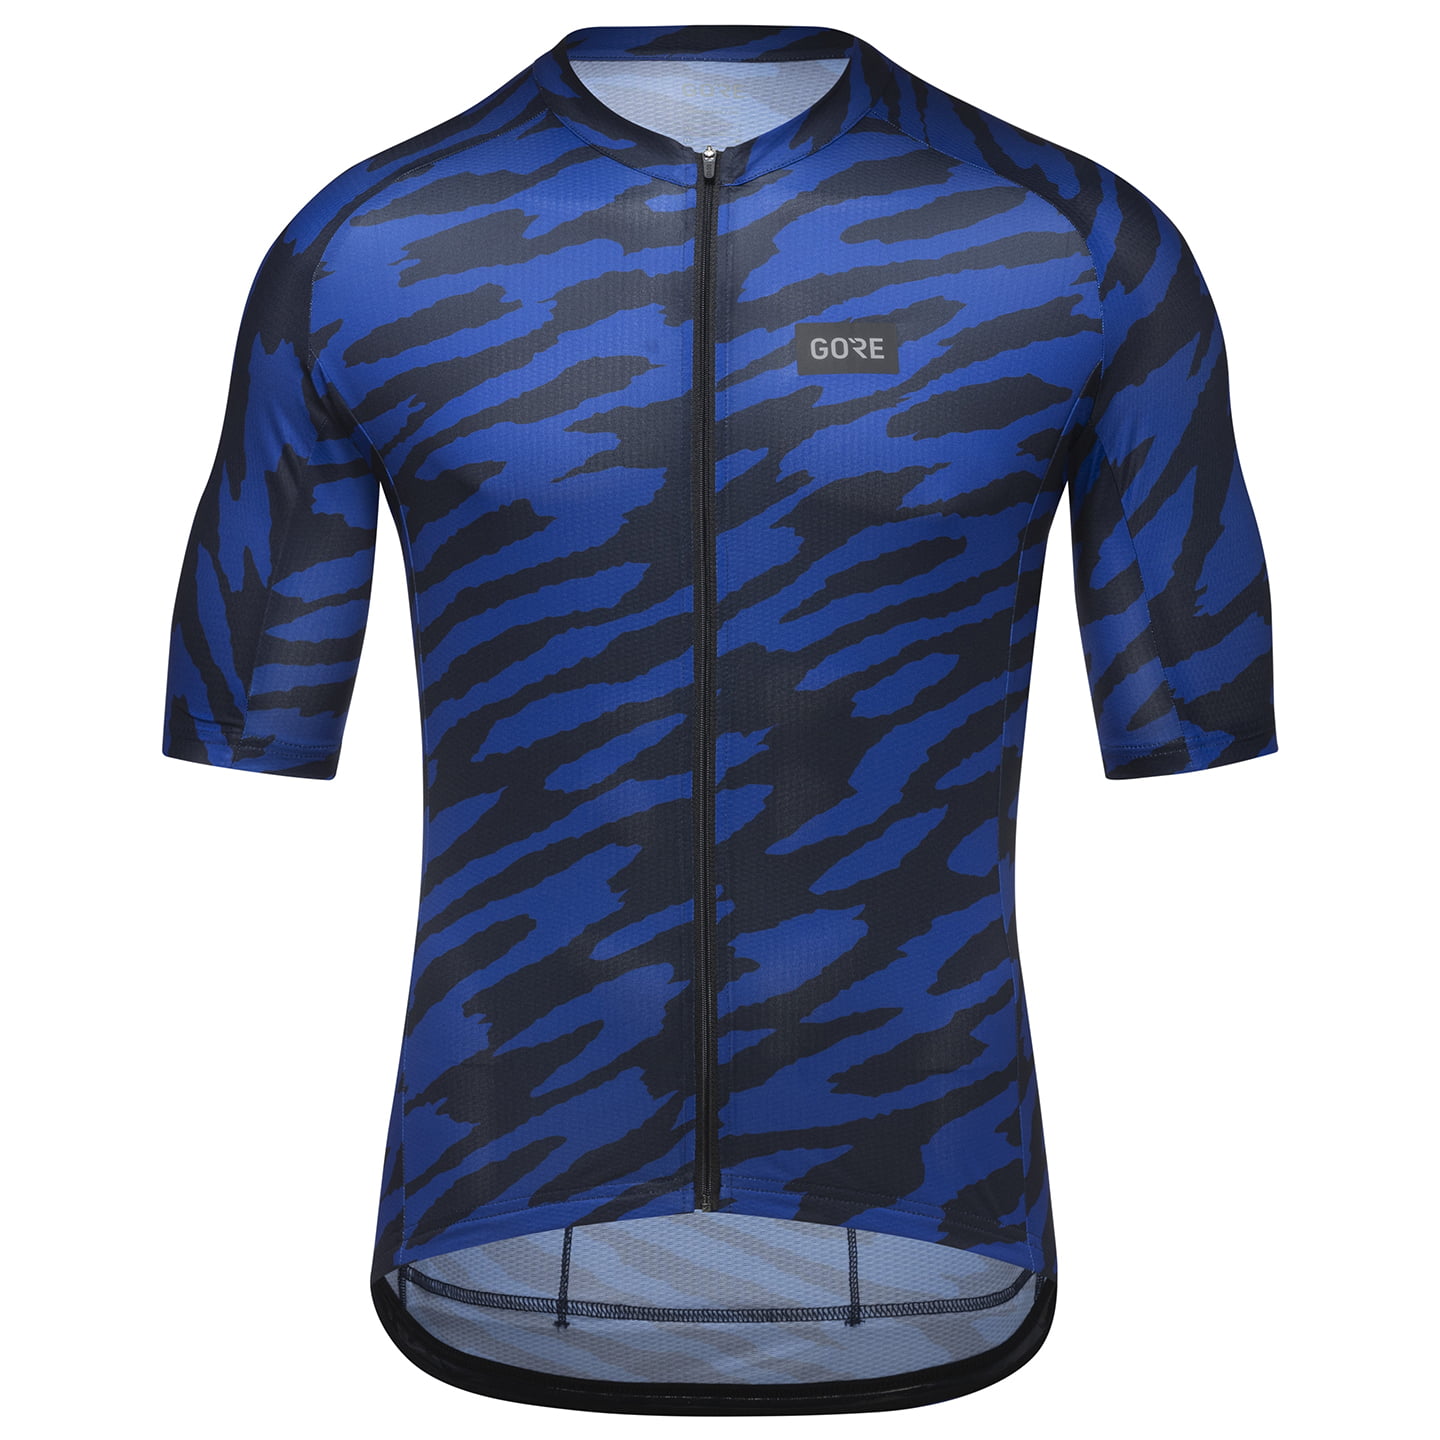 Spirit Organic Camo Short Sleeve Jersey Short Sleeve Jersey, for men, size M, Cycling jersey, Cycling clothing